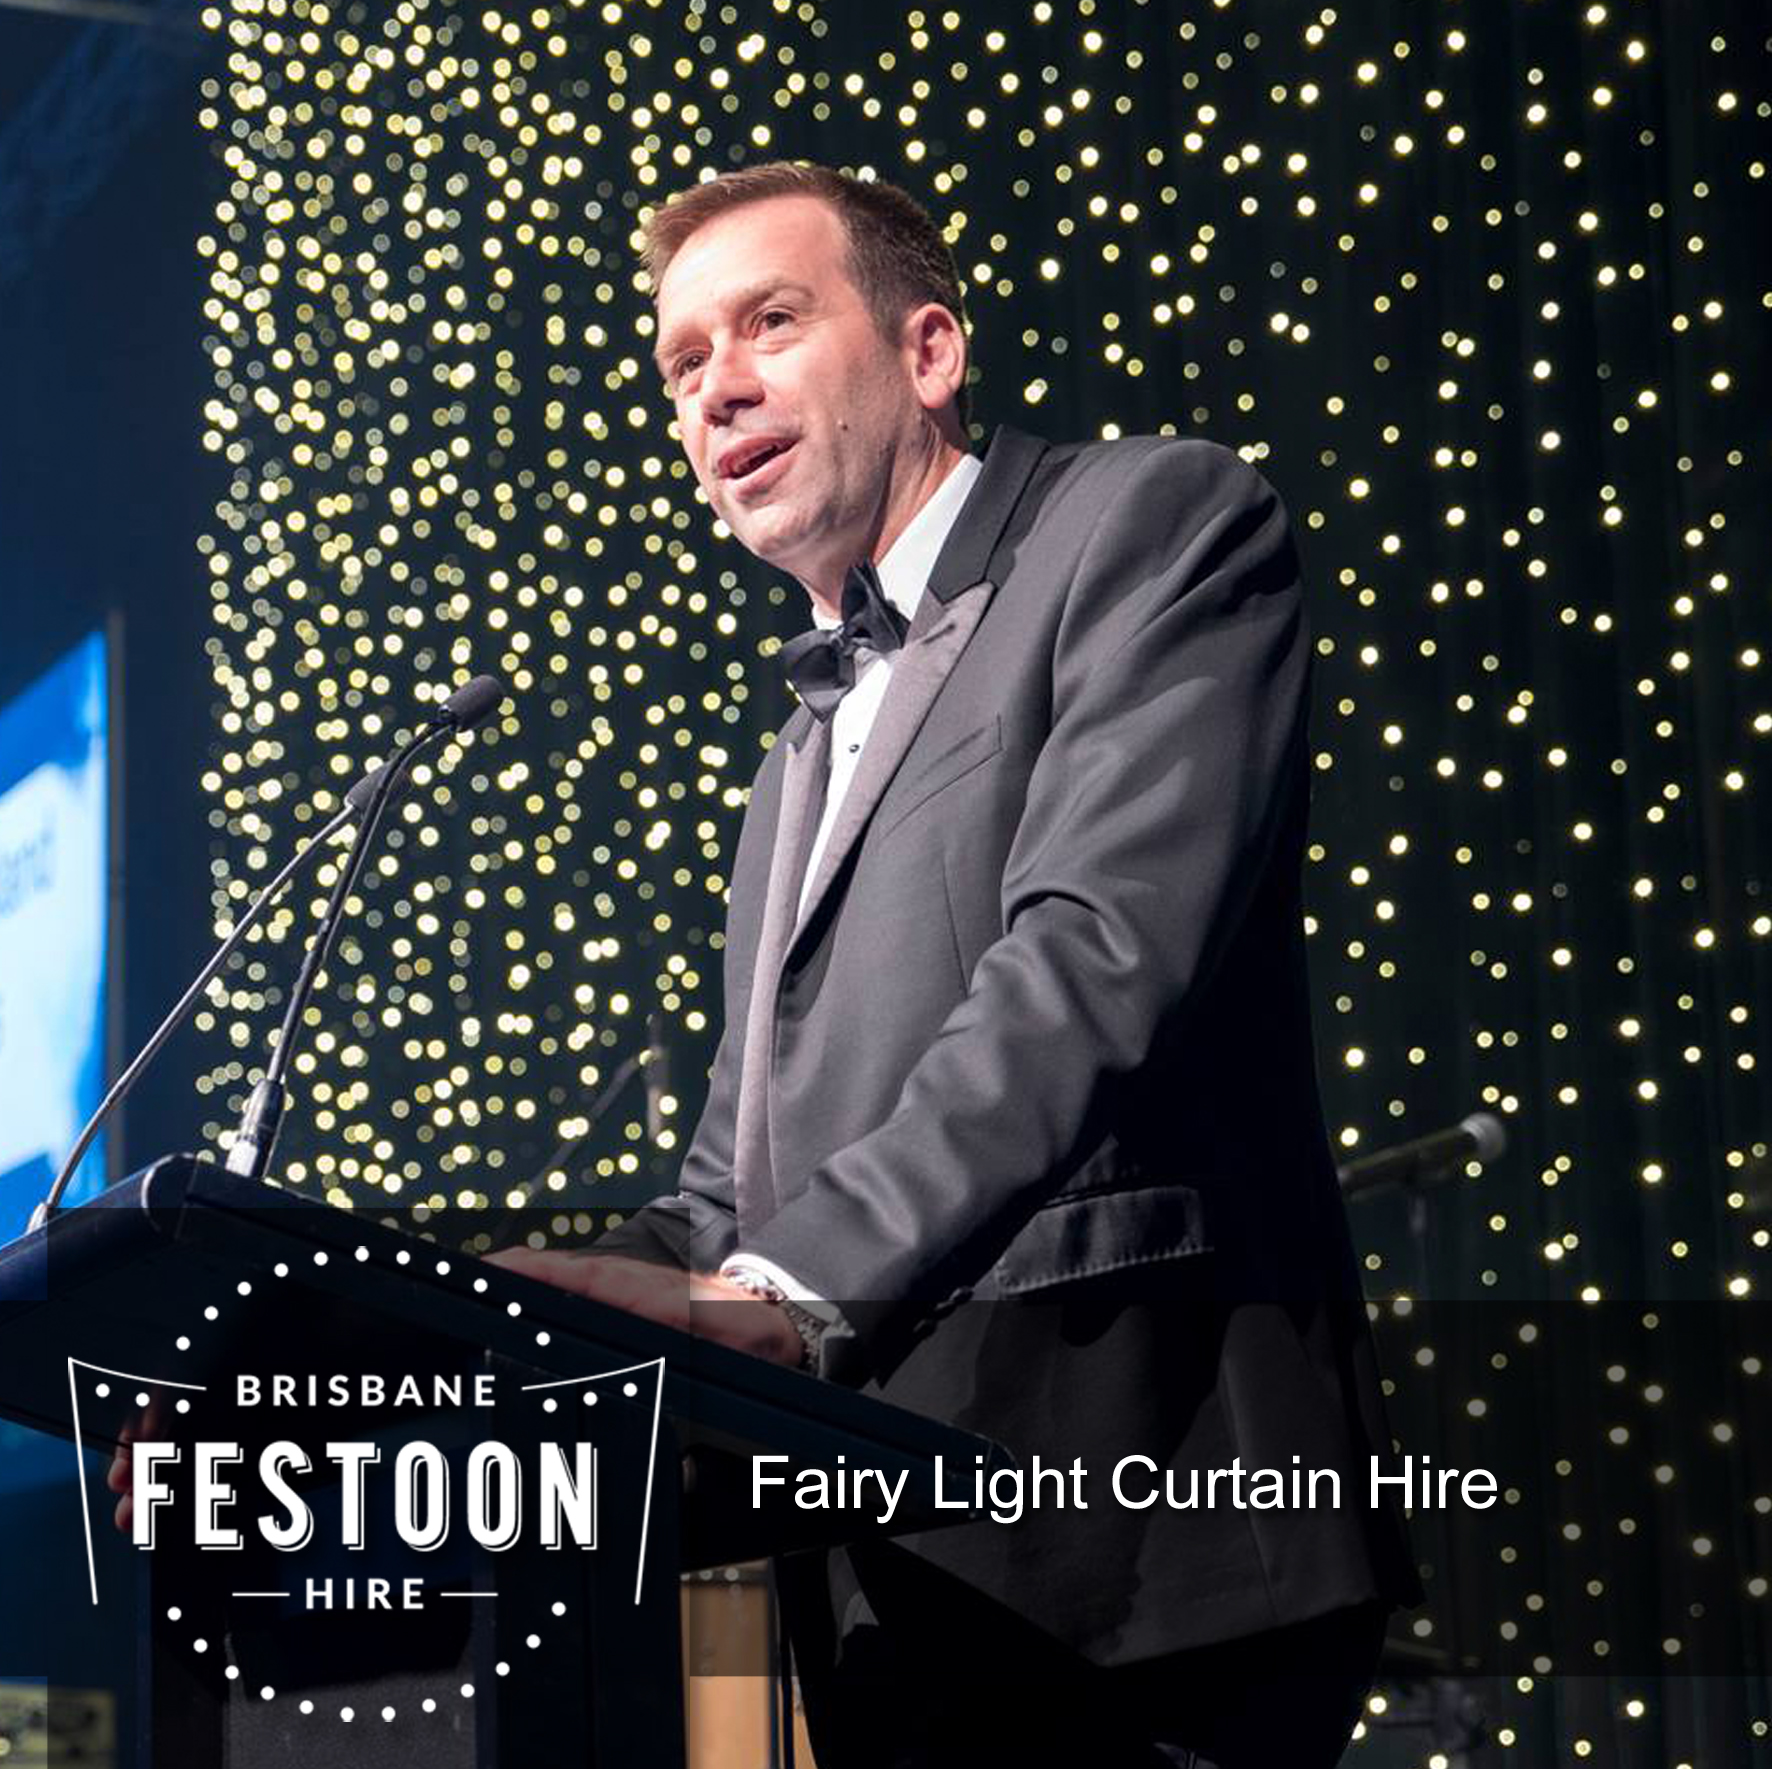 Brisbane Festoon Hire - Fairy Light Curtain Hire 3.jpg